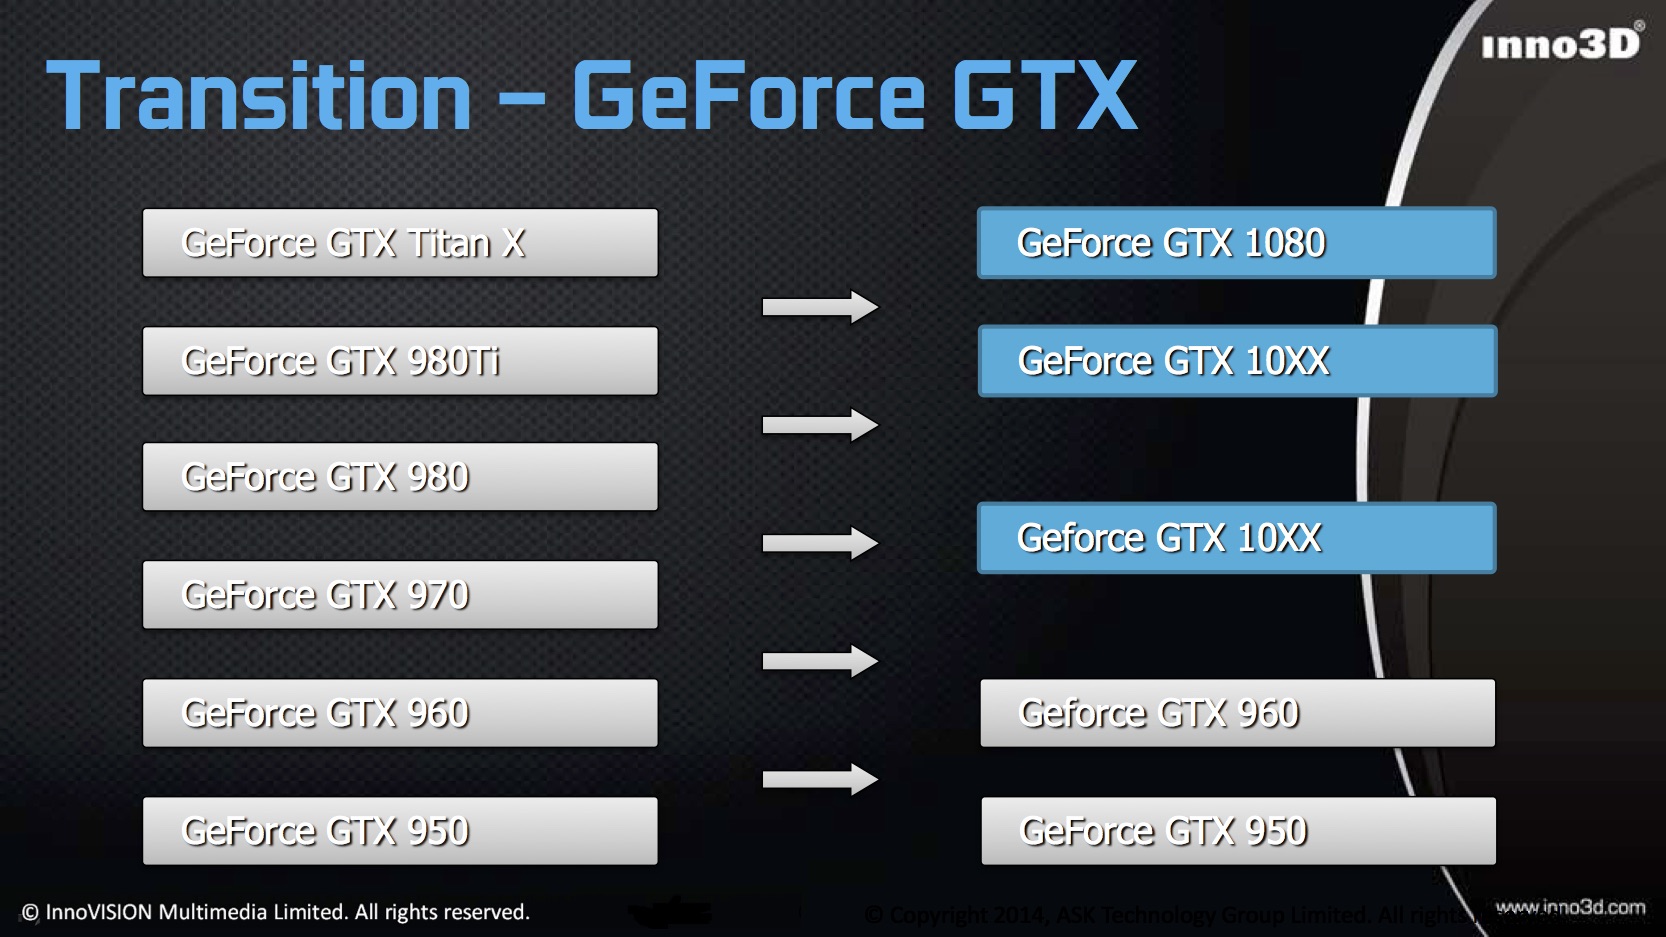 tårn bundet øjeblikkelig NVIDIA GeForce GTX 1060 to feature 6GB 192-bit memory? | VideoCardz.com